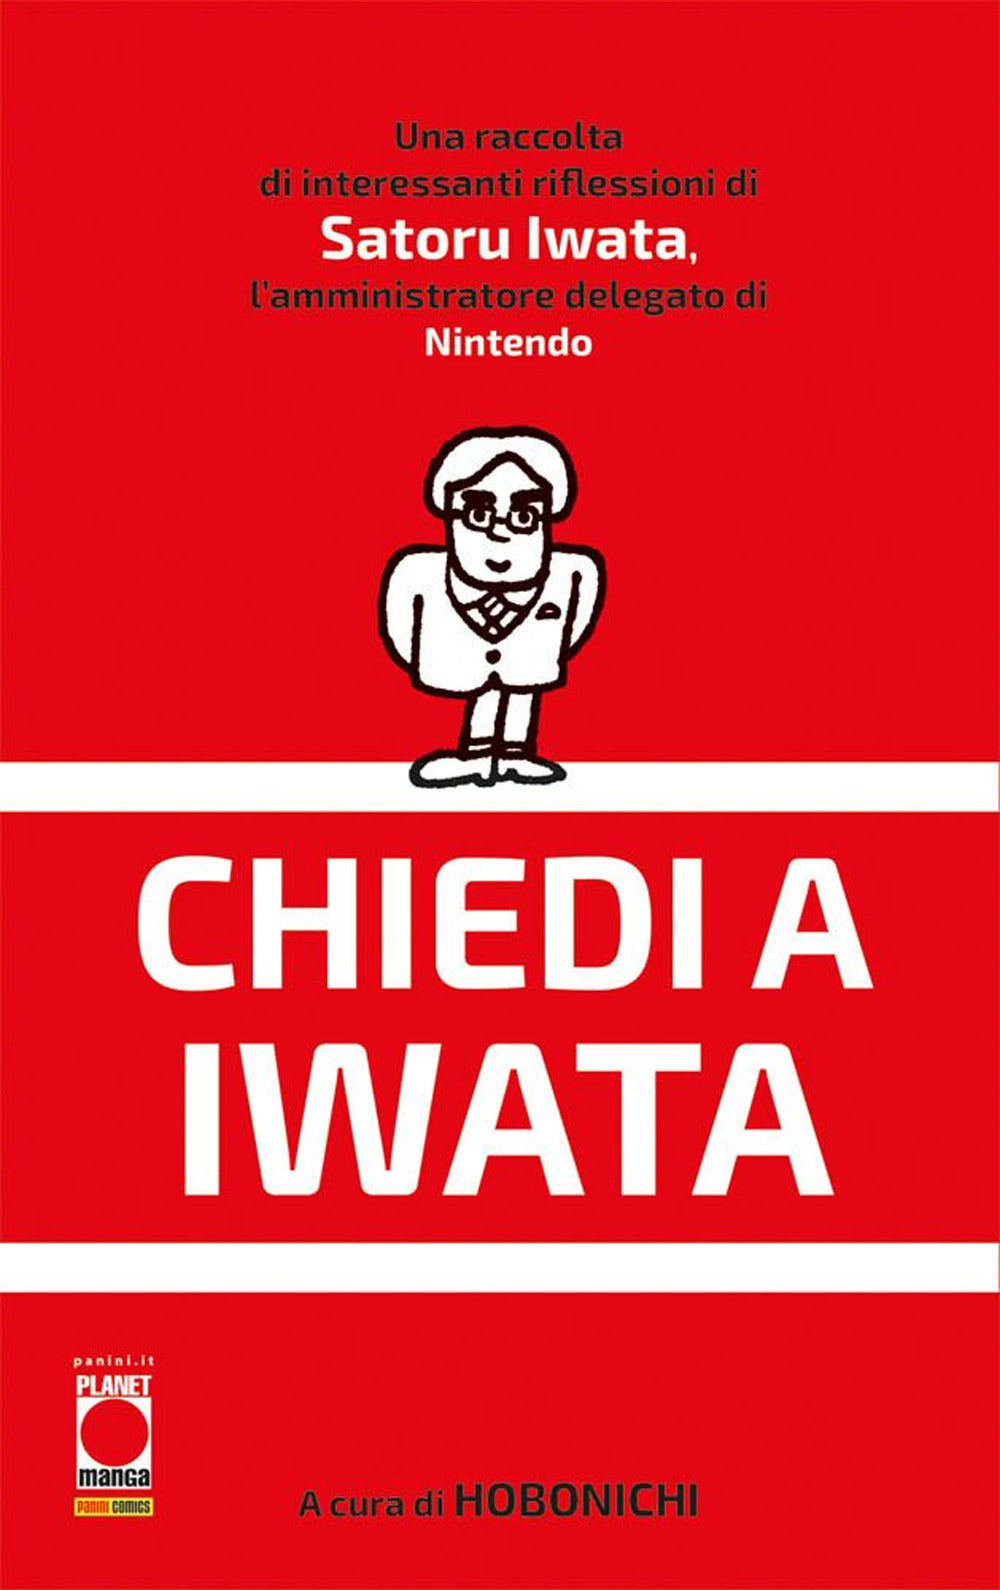 Chiedi a Iwata.